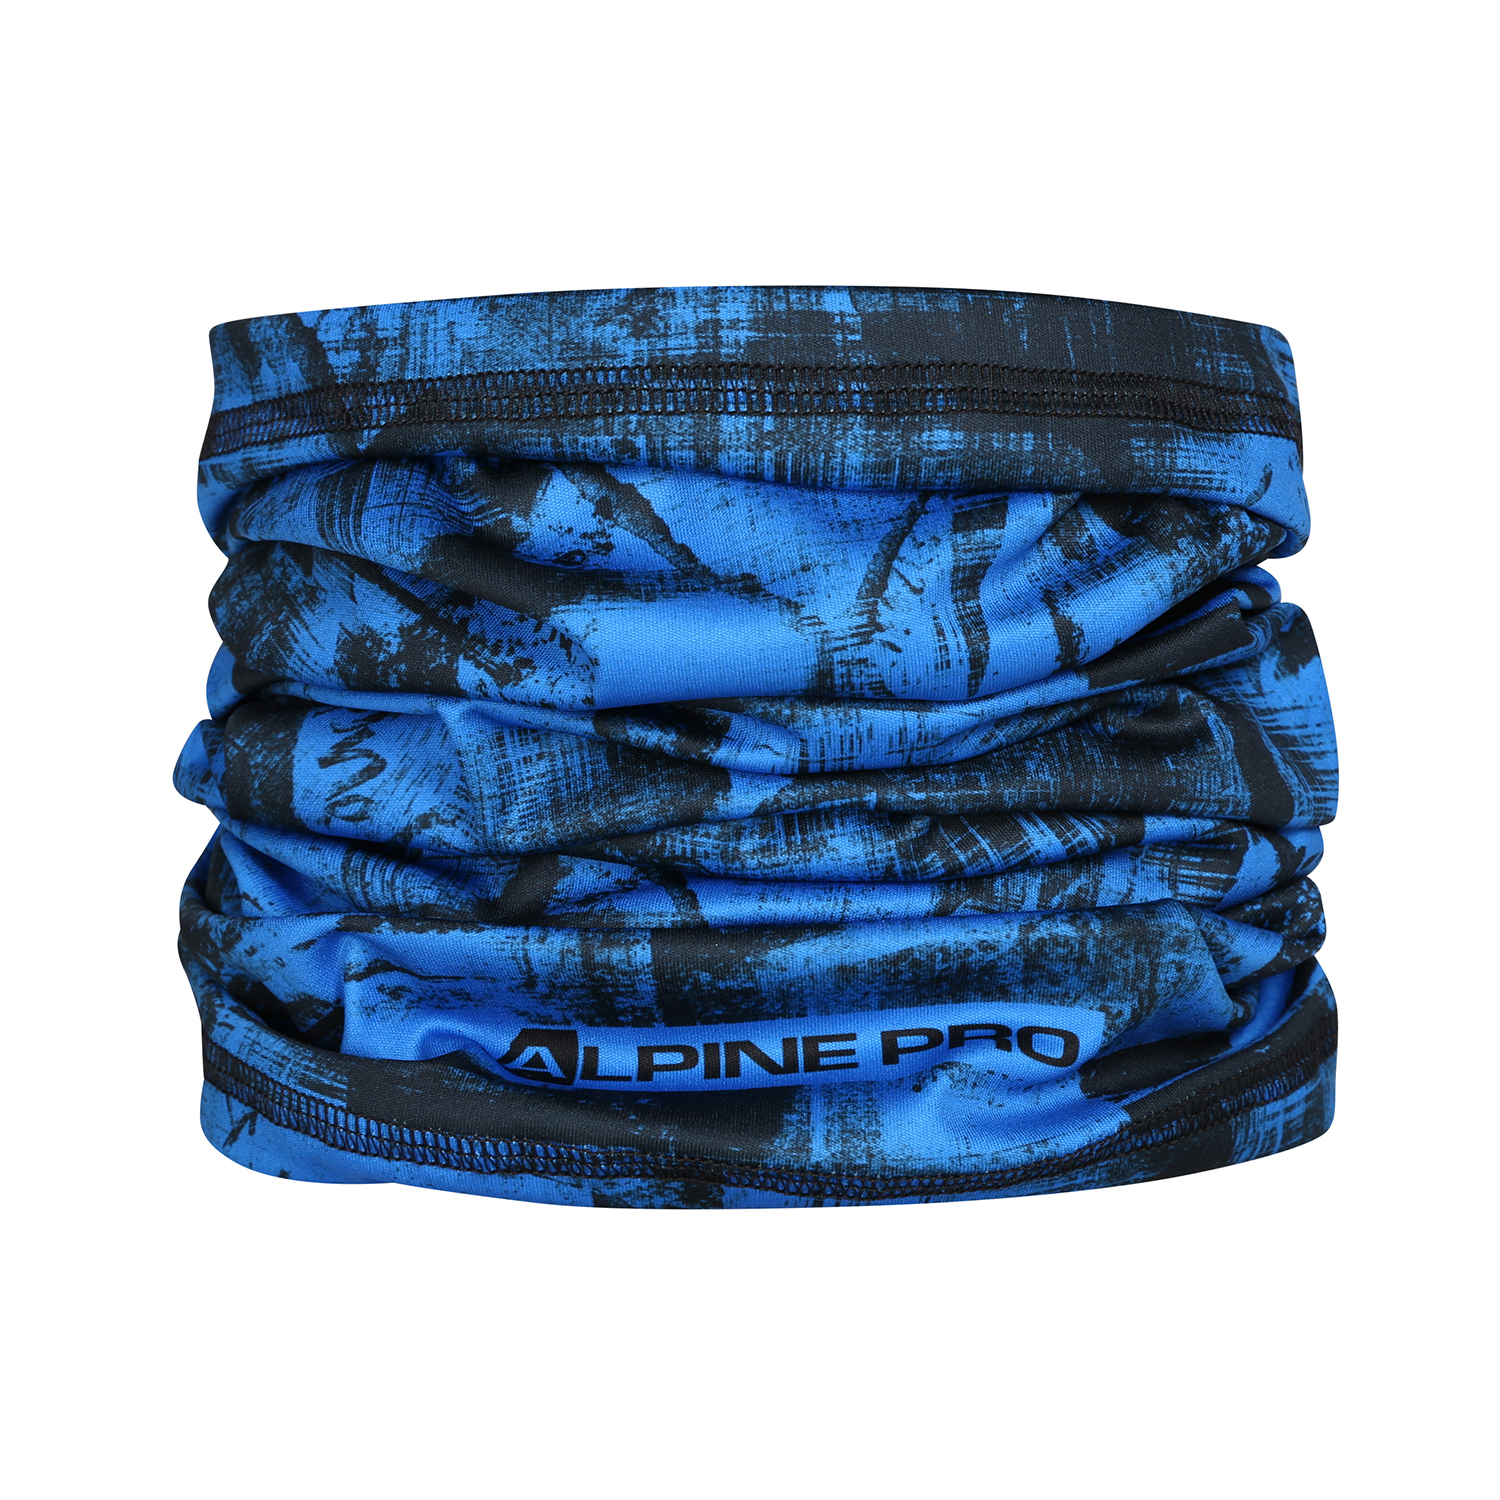 Quick drying wrap 5in1 ALPINE PRO RAHUL 3 vallarta blue variant PA